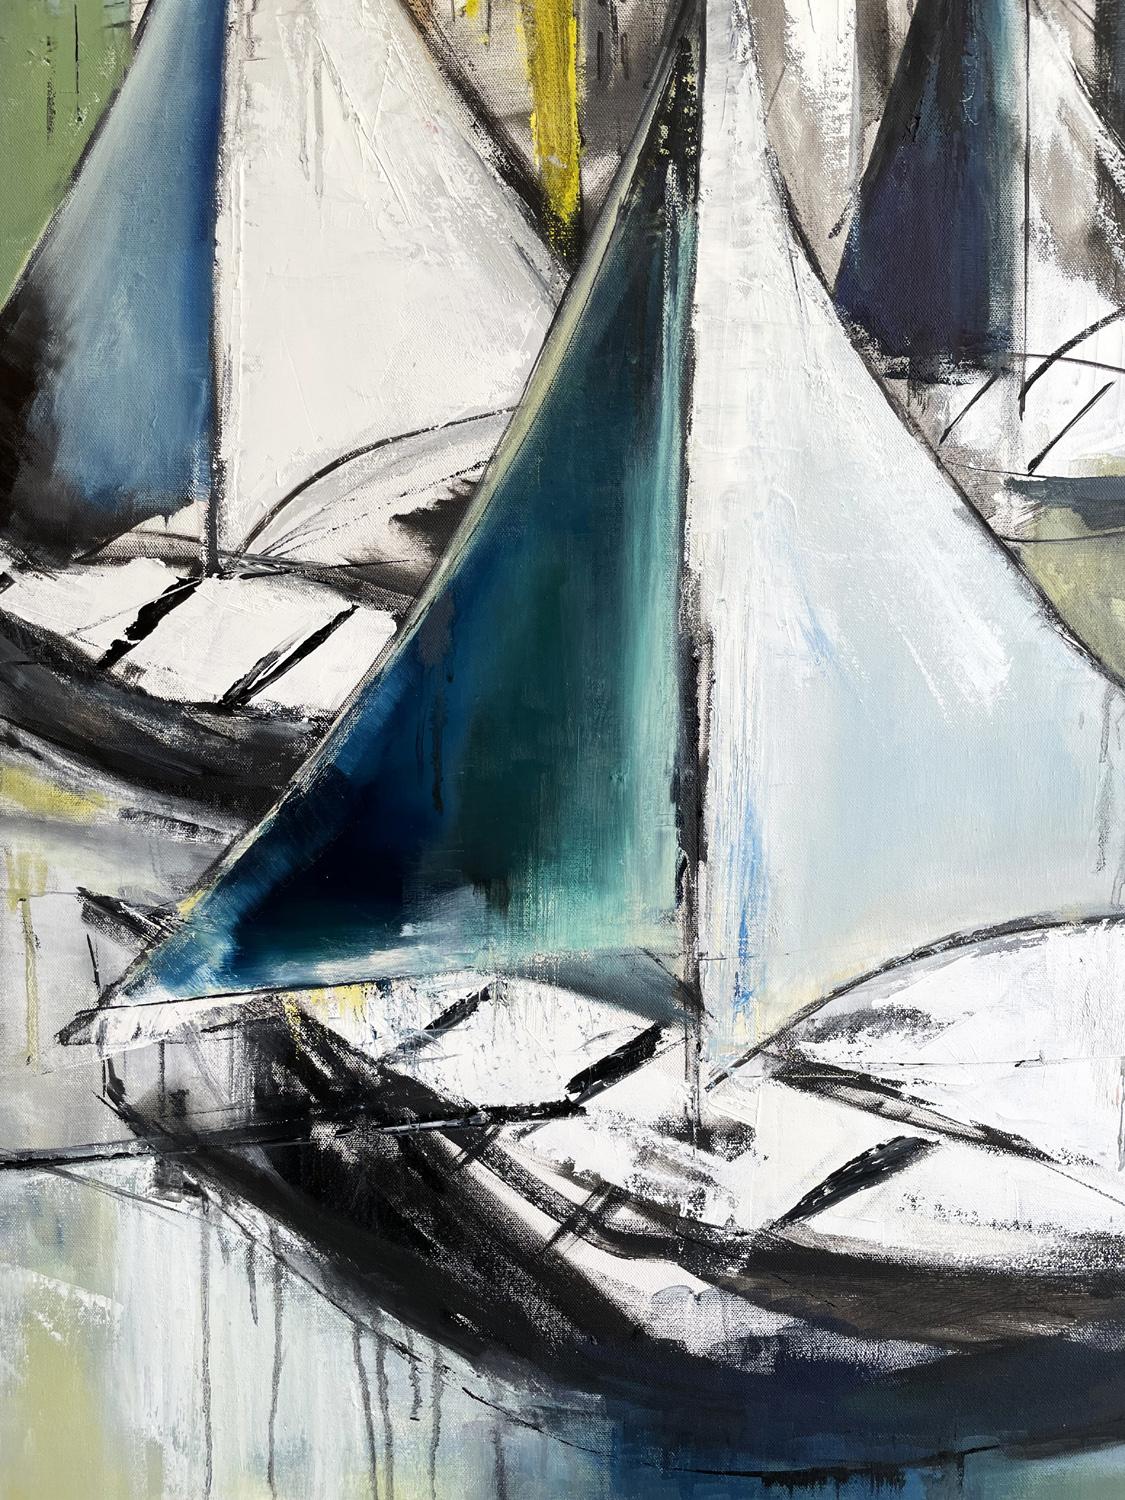 Sails at Coastal Town - Painting by KOKO HOVAGUIMIAN